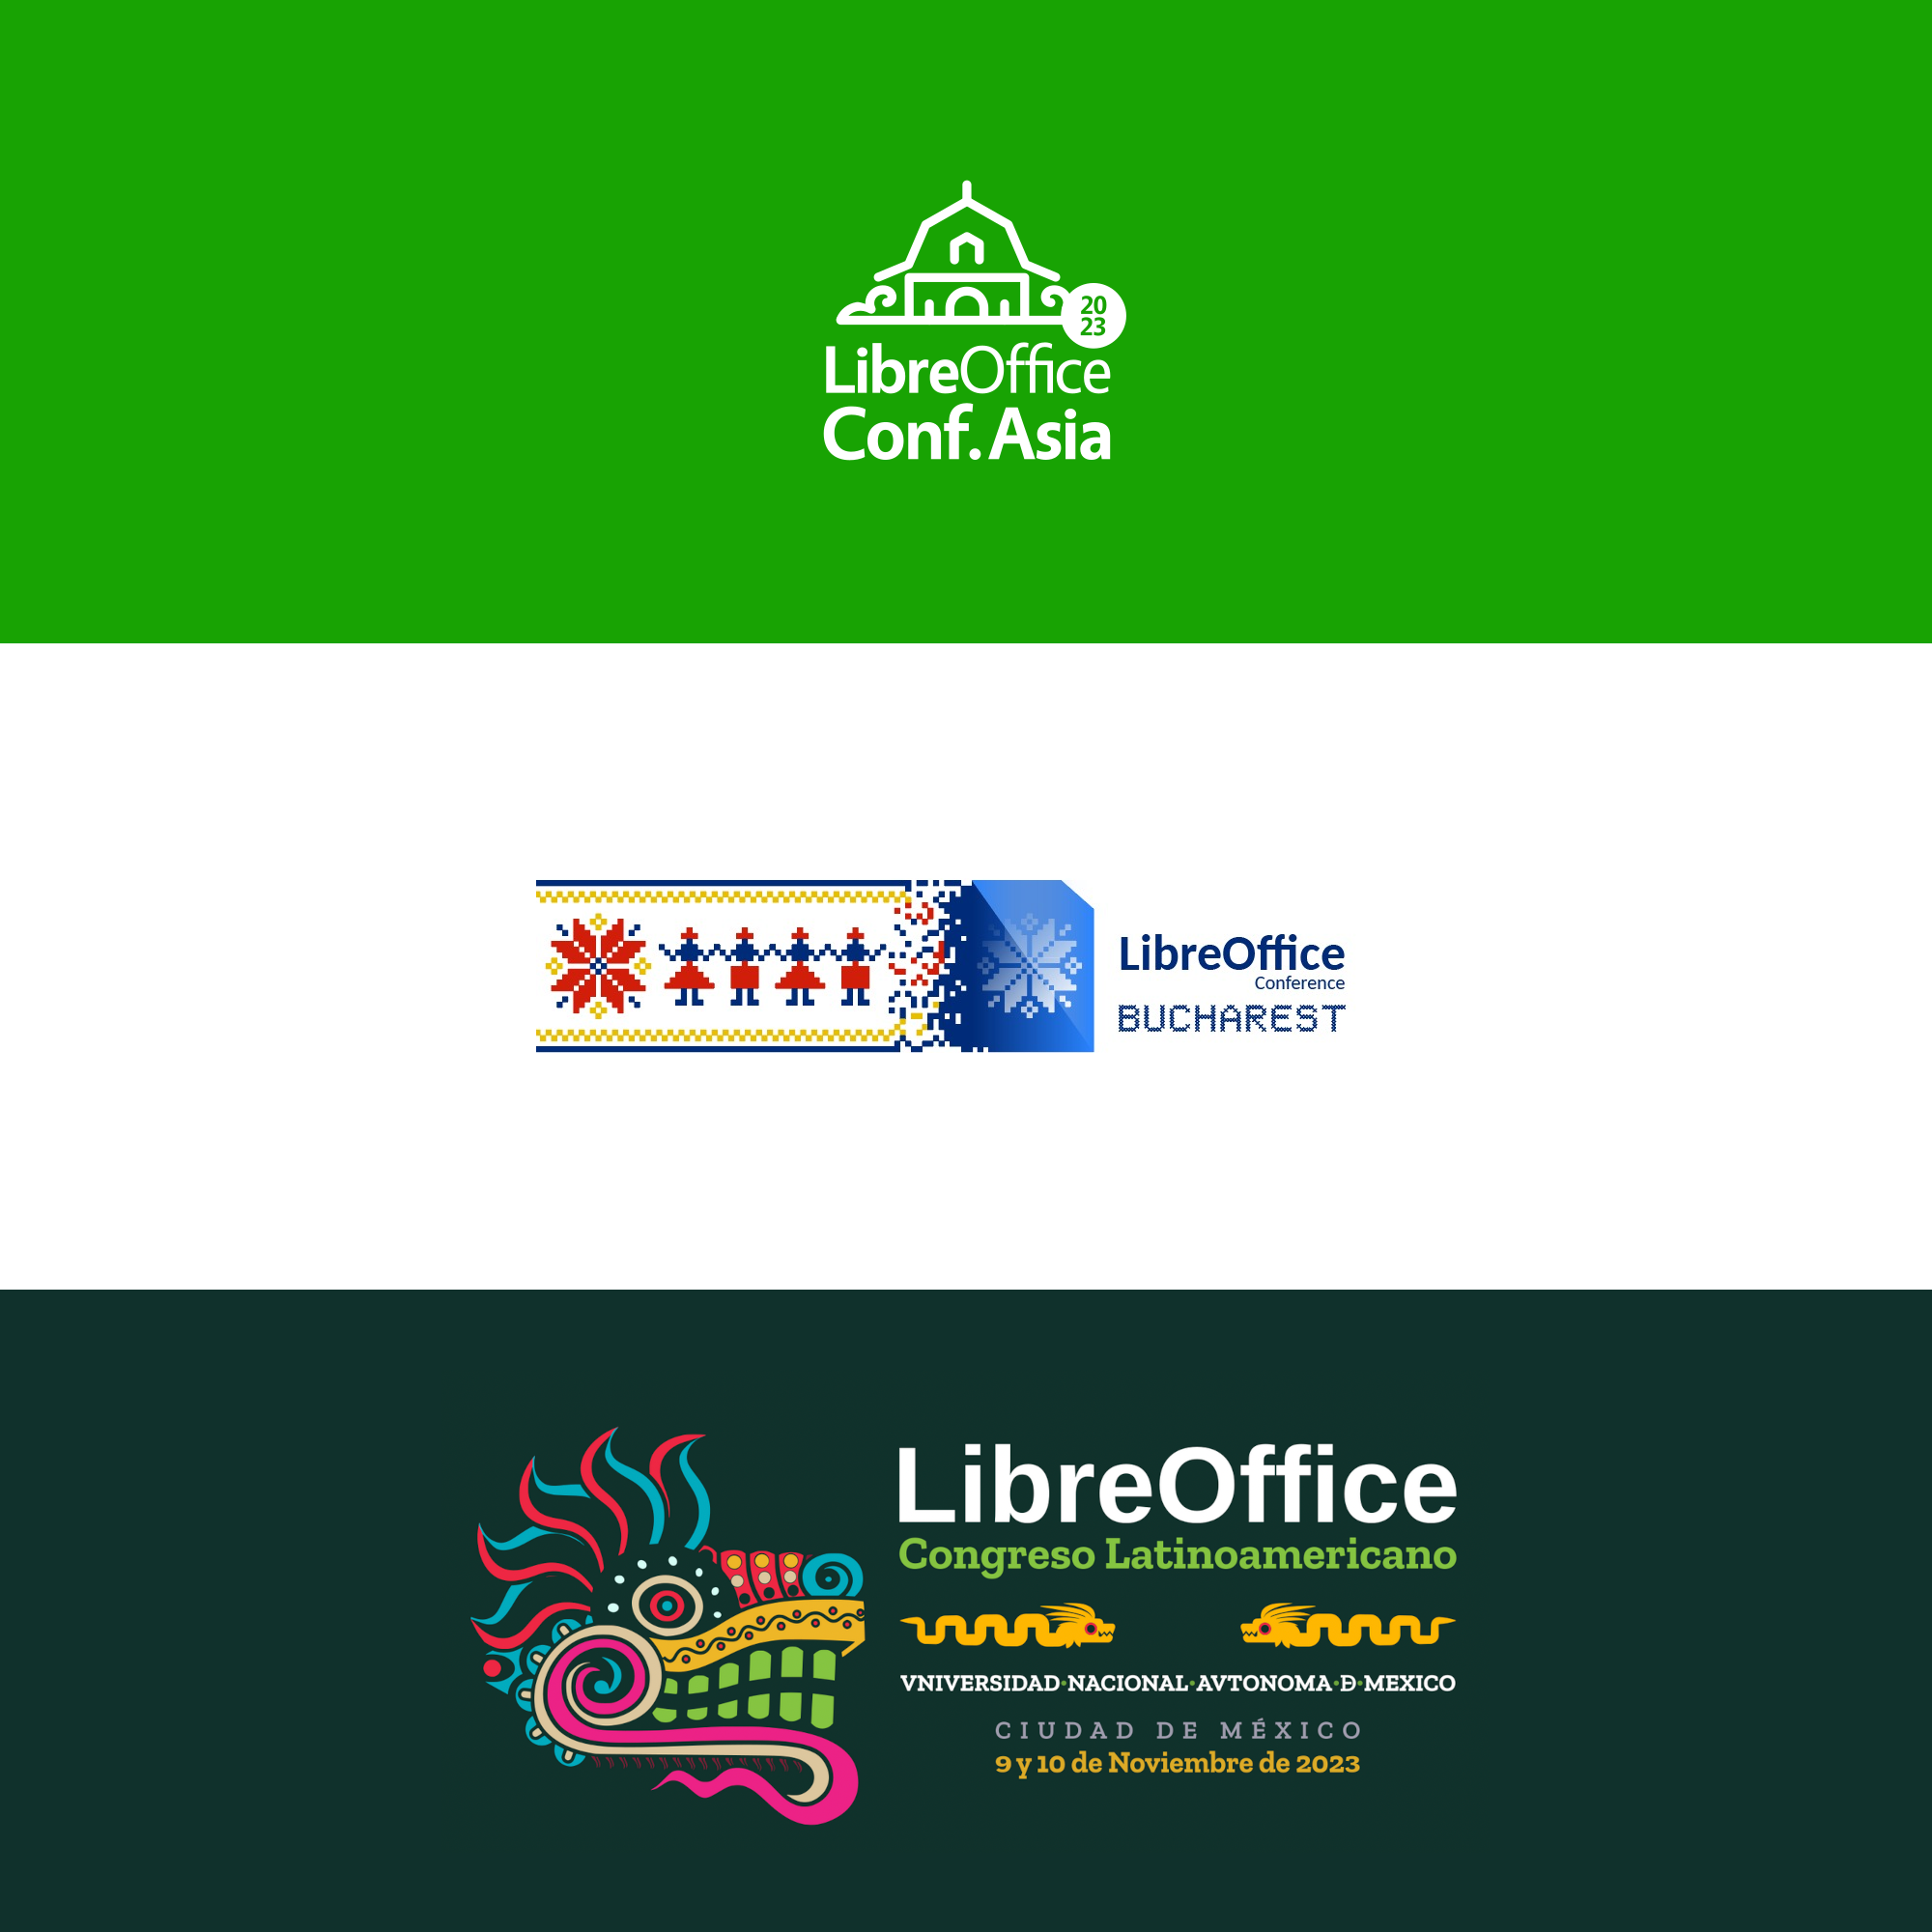 LibreOffice conference logos